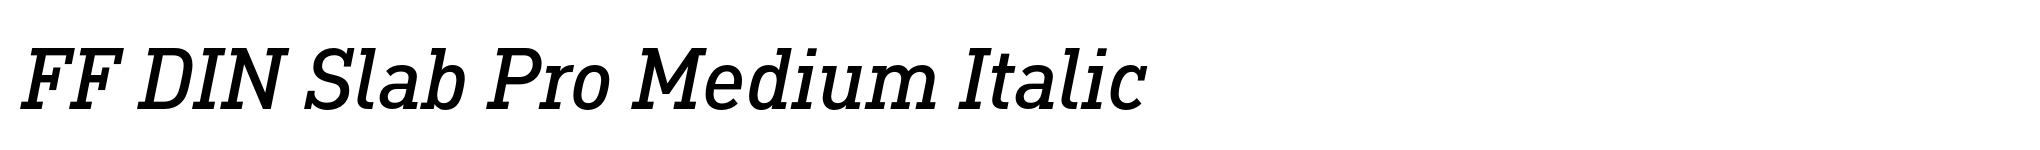 FF DIN Slab Pro Medium Italic image